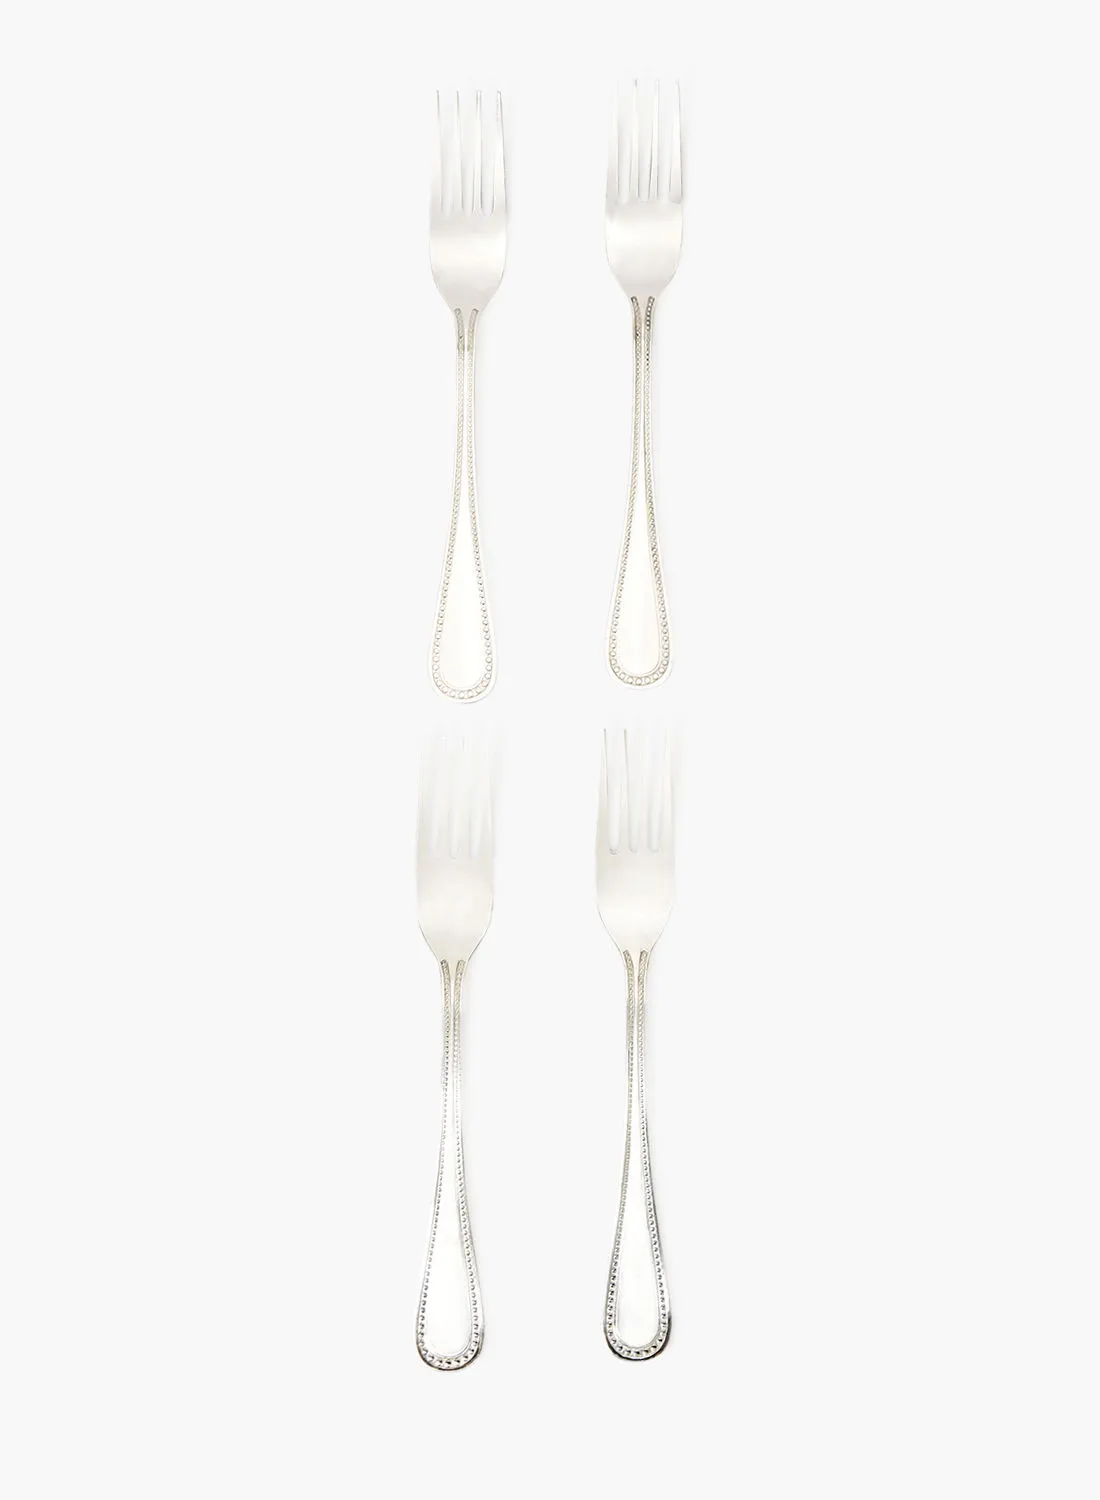 Amal 4 Piece Forks Set - Made Of Stainless Steel - Silverware Flatware - Fork Set - Serves 4 - Design Silver Mallow